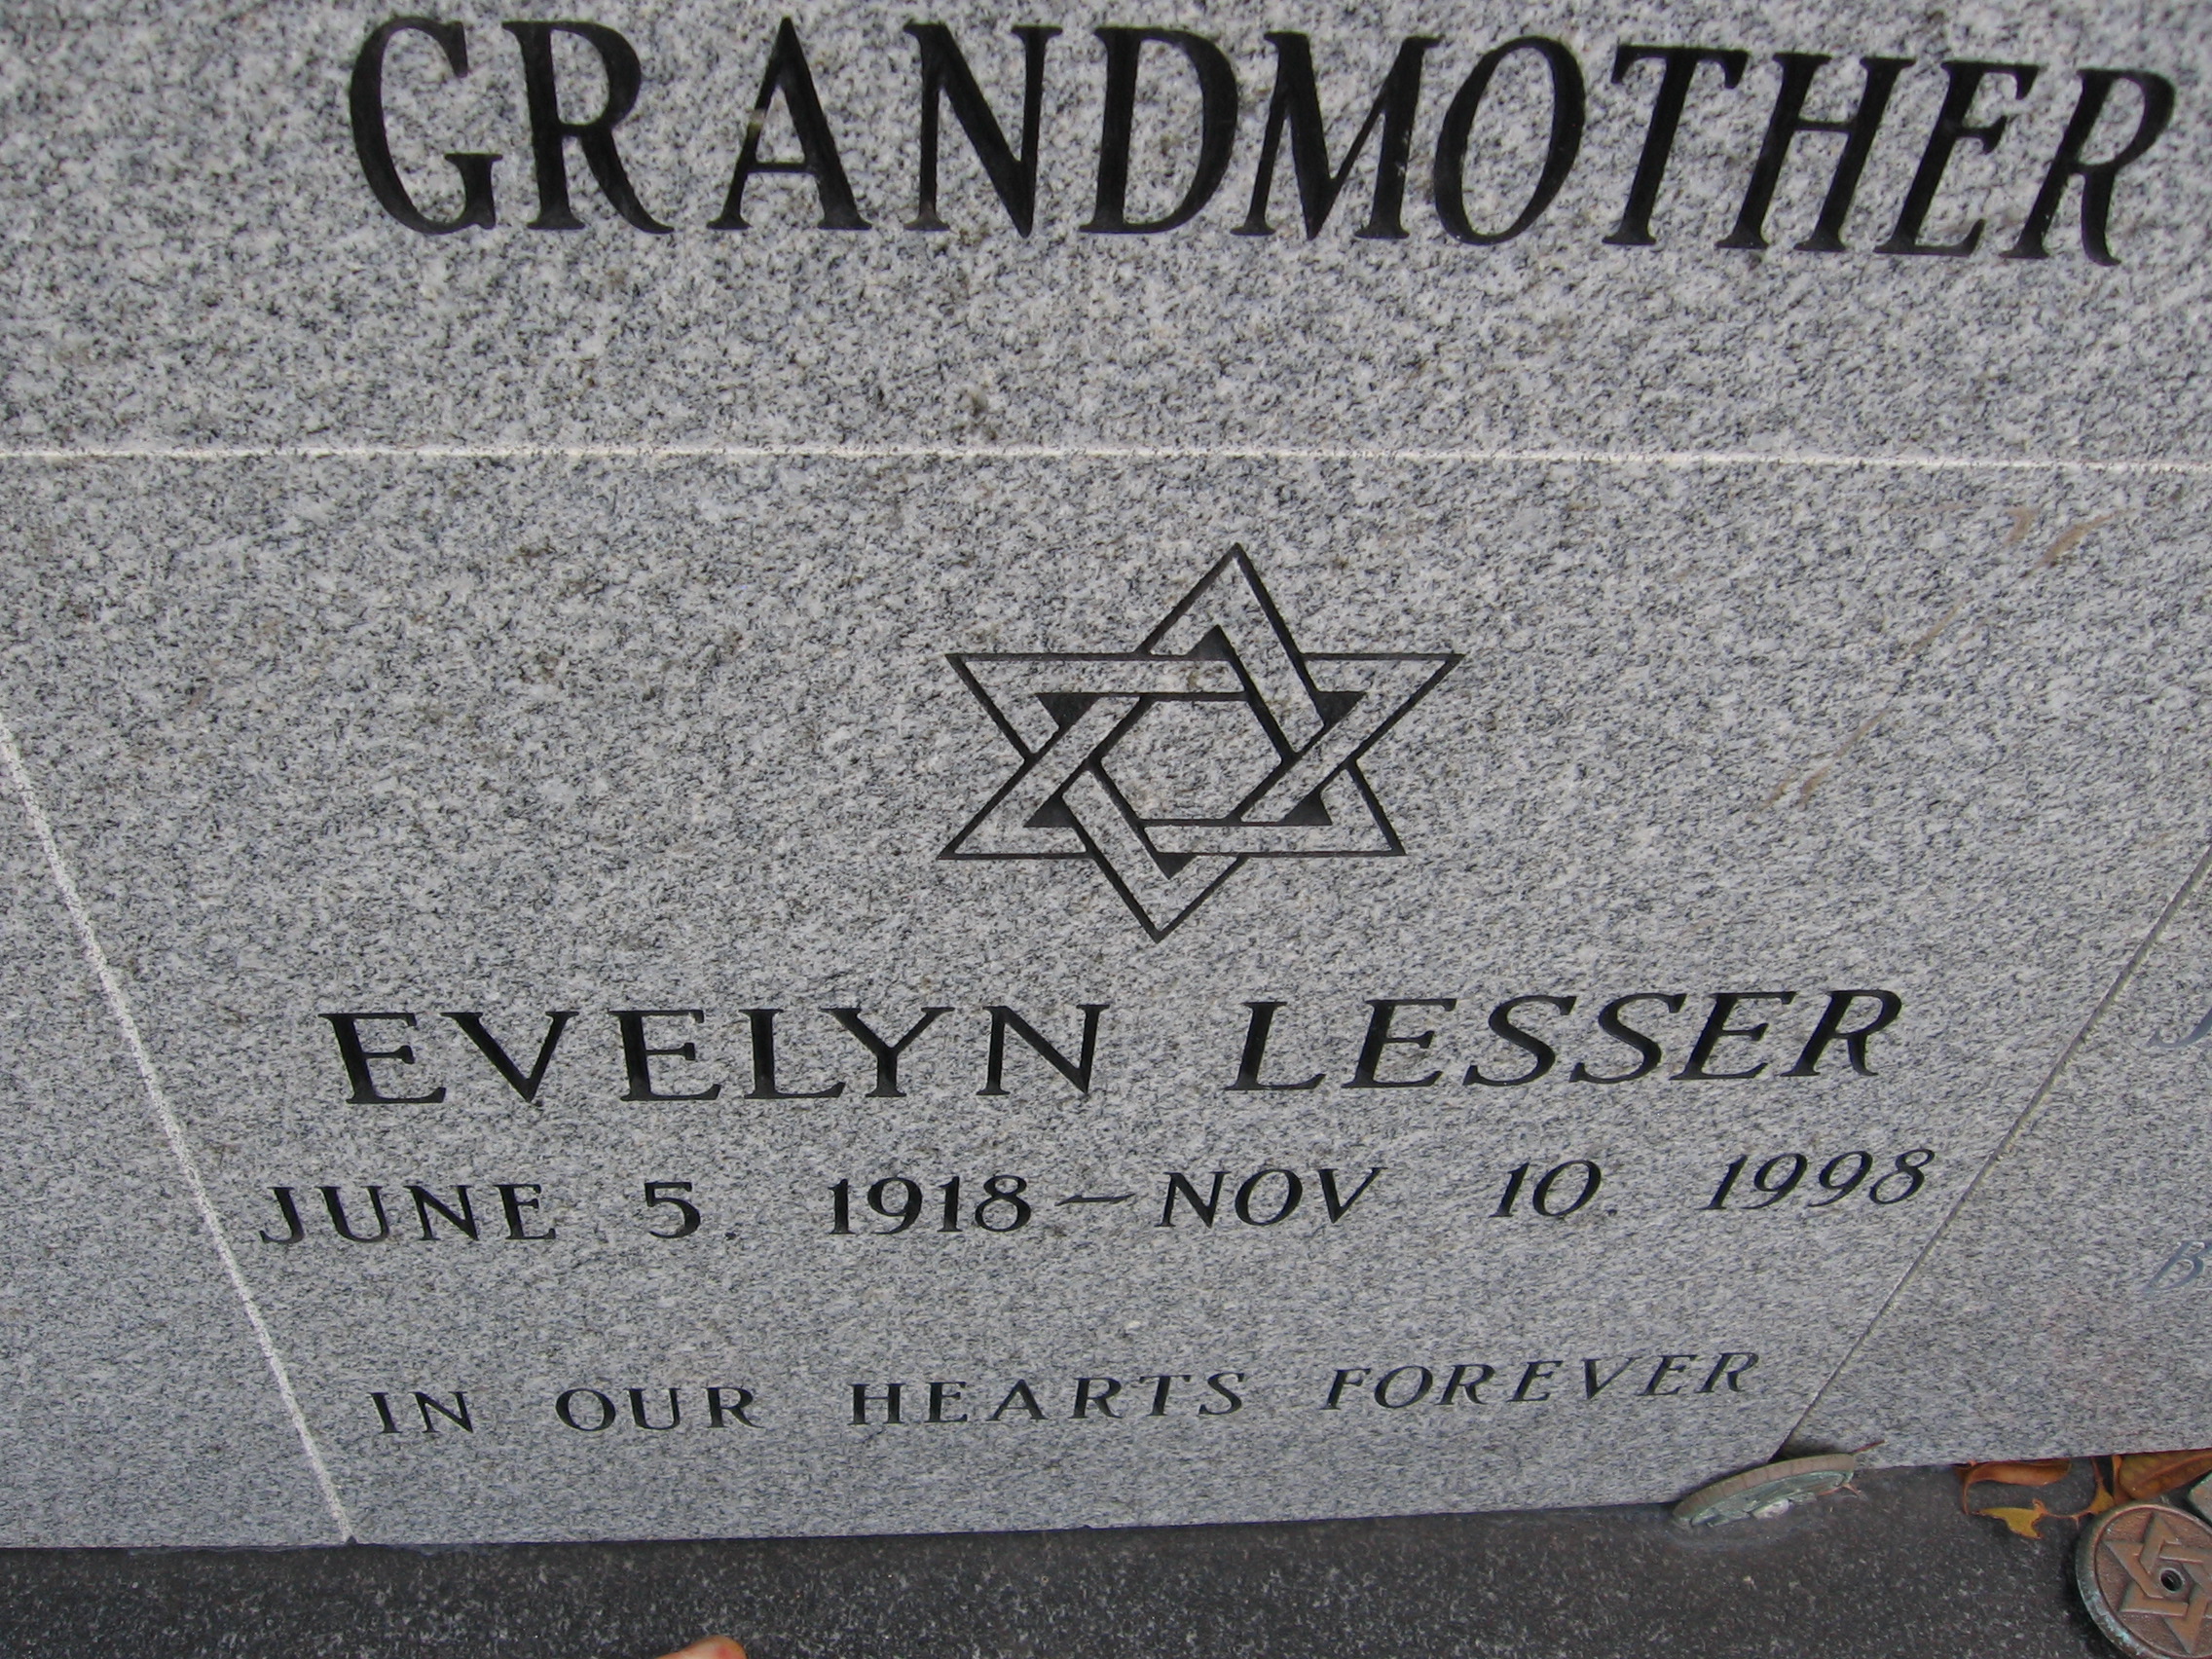 Evelyn Lesser